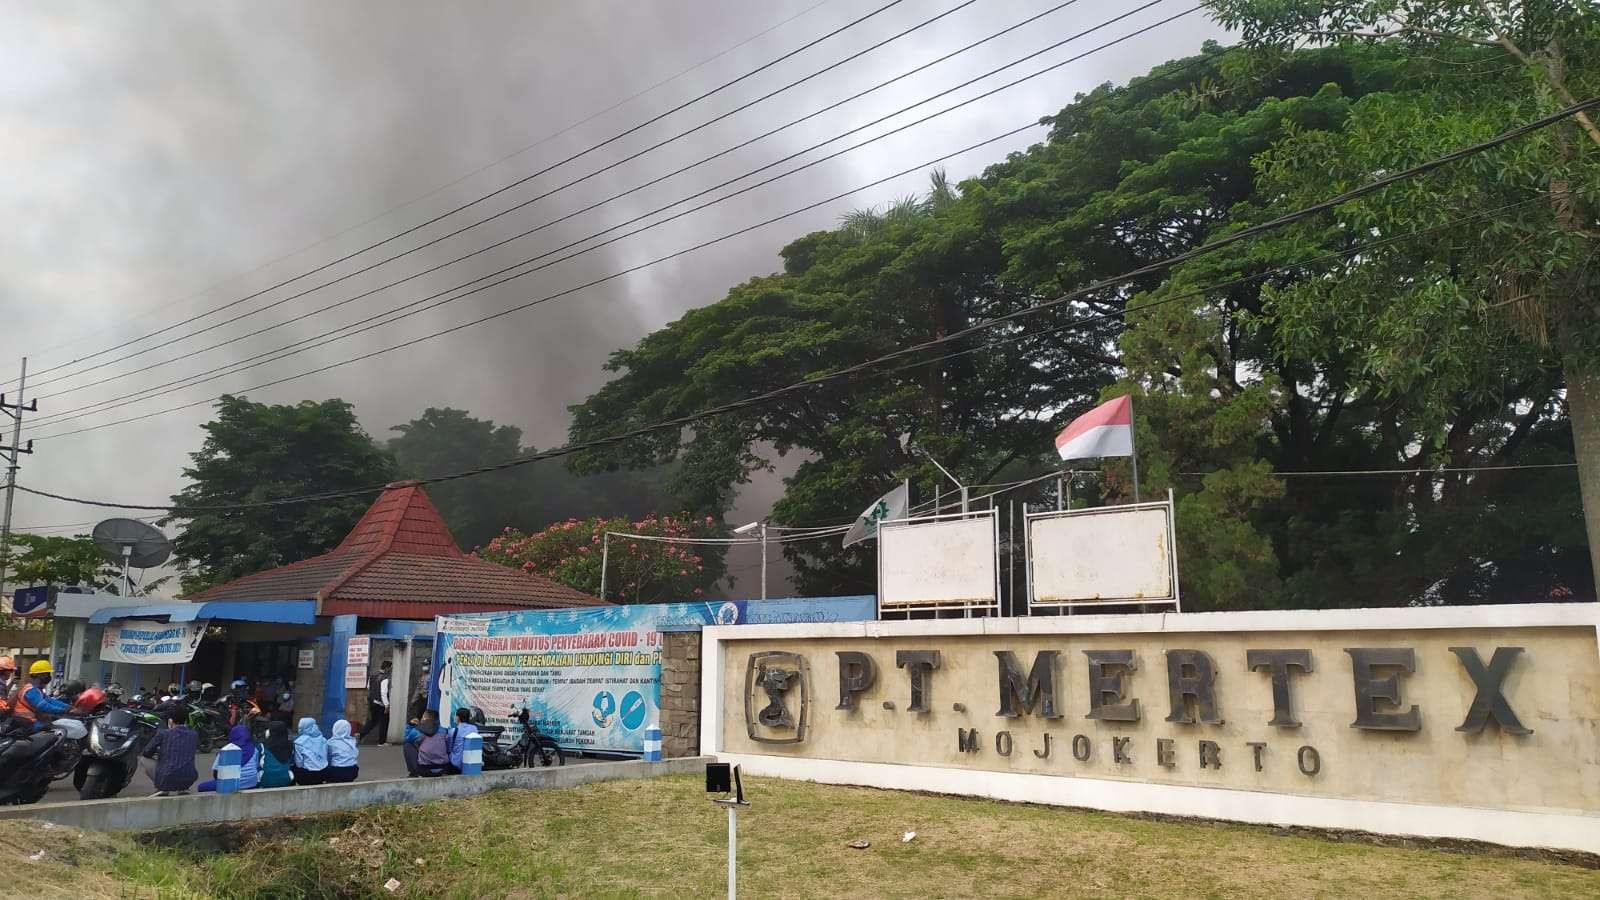 Asap membumbung tinggi di PT Mertex Mojokerto yang kebakaran.(Deni Lukmantara/Ngopibareng)